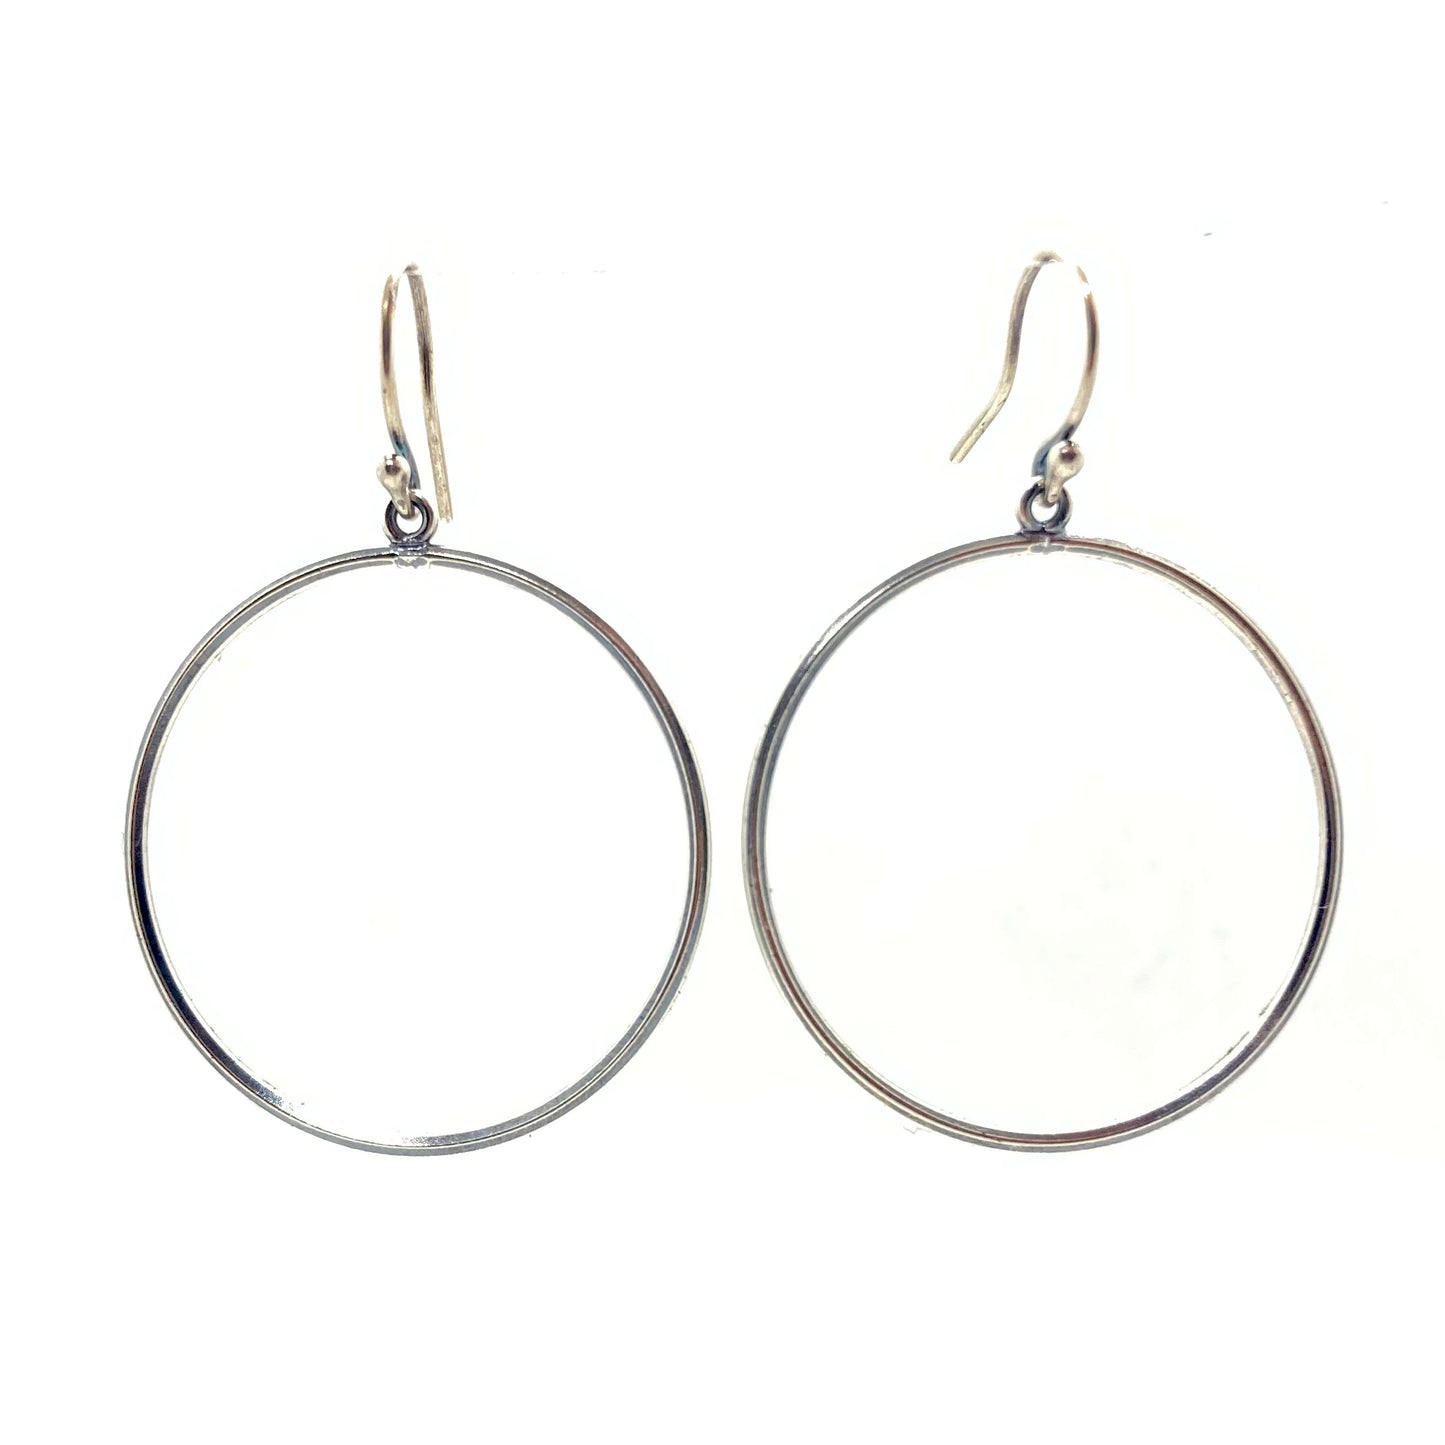 New Moon Hoop Earrings in Sterling Silver | Moon Phase Earrings